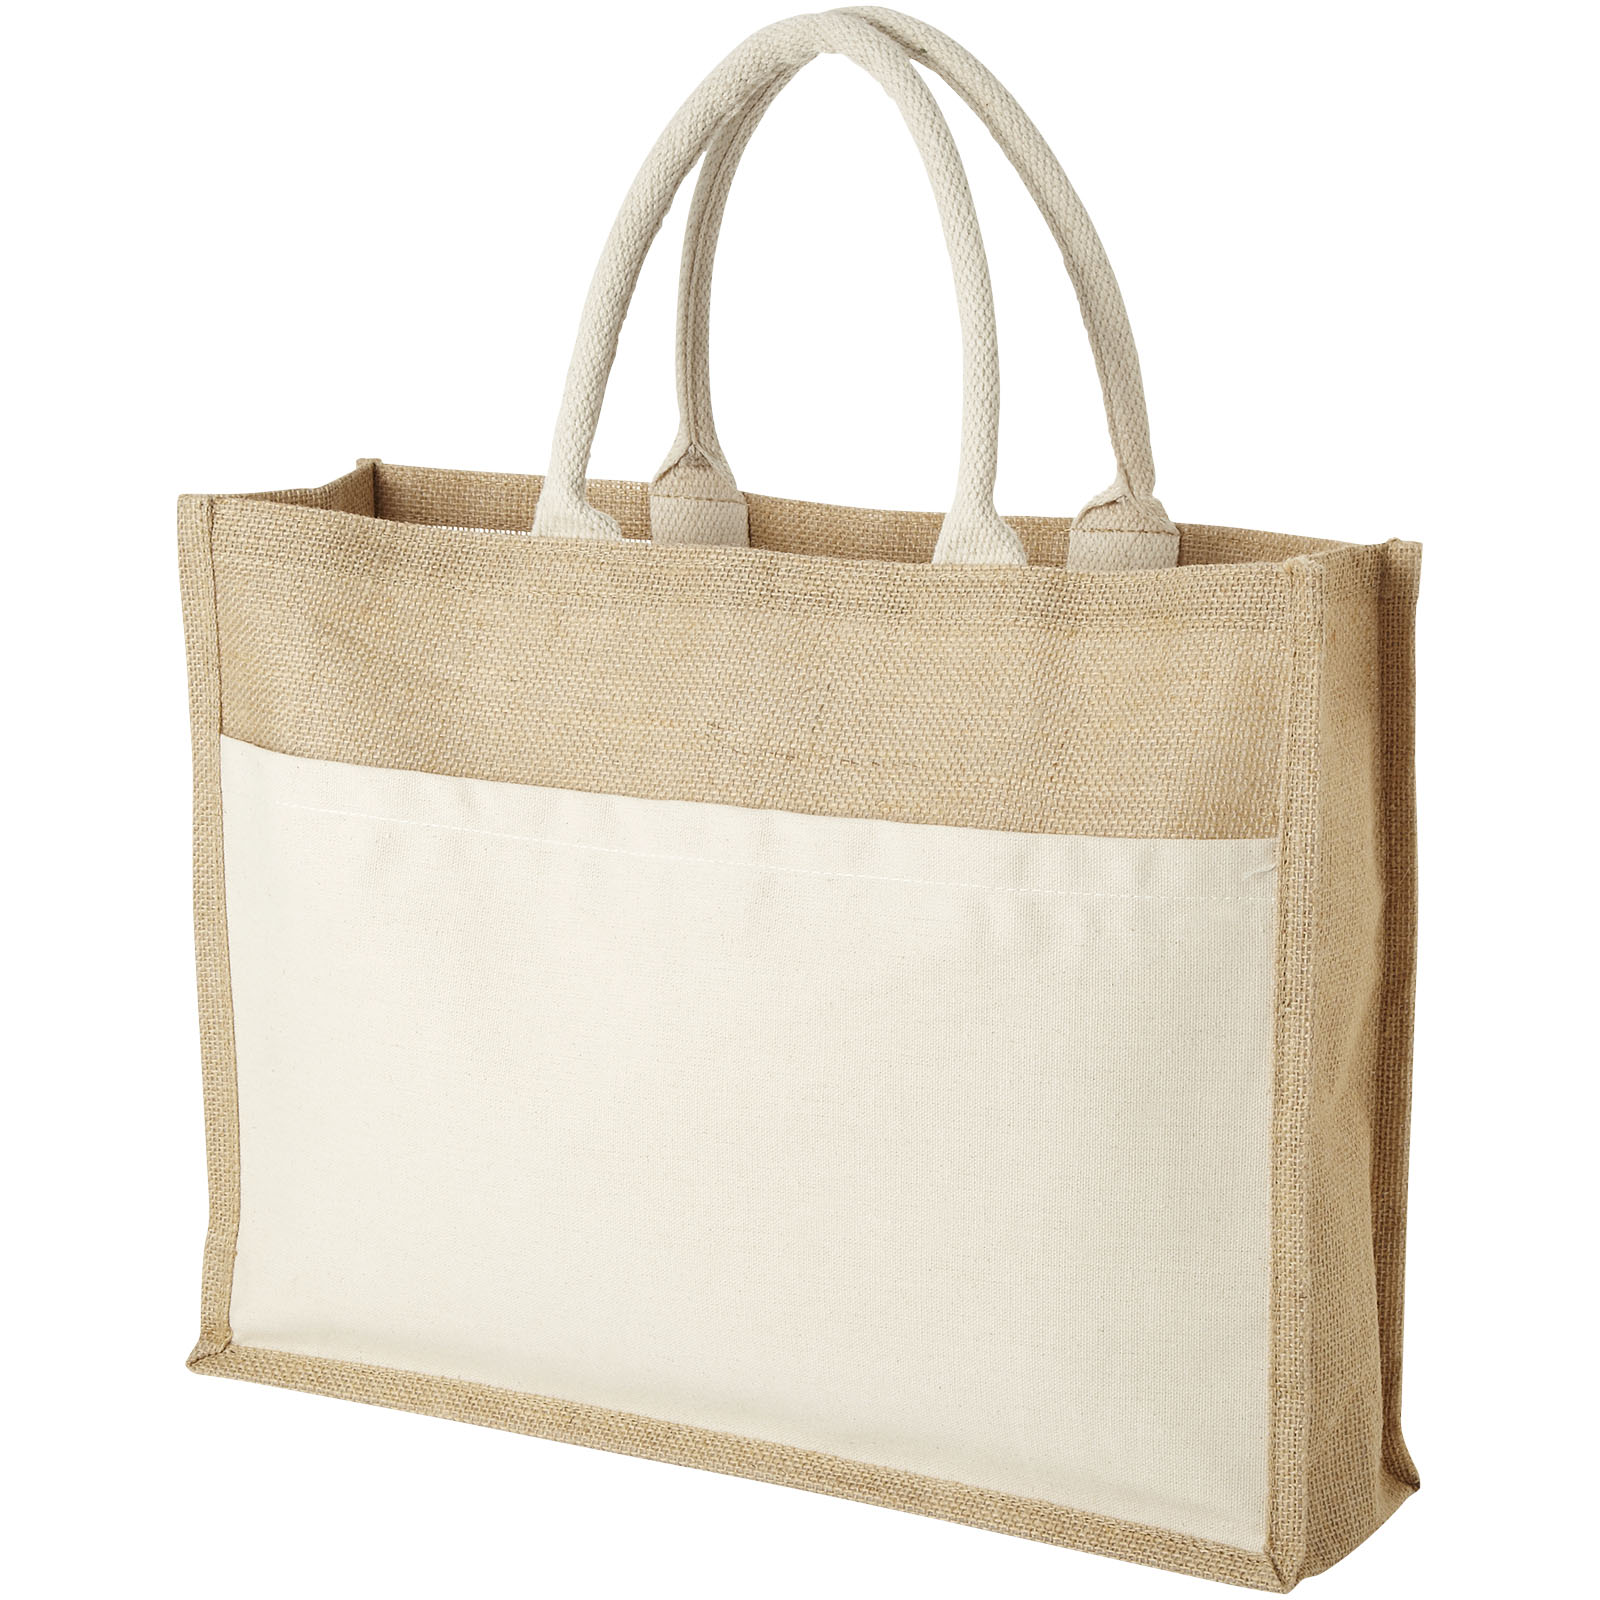 Shopping & Tote Bags - Mumbay cotton pocket jute tote bag 18L